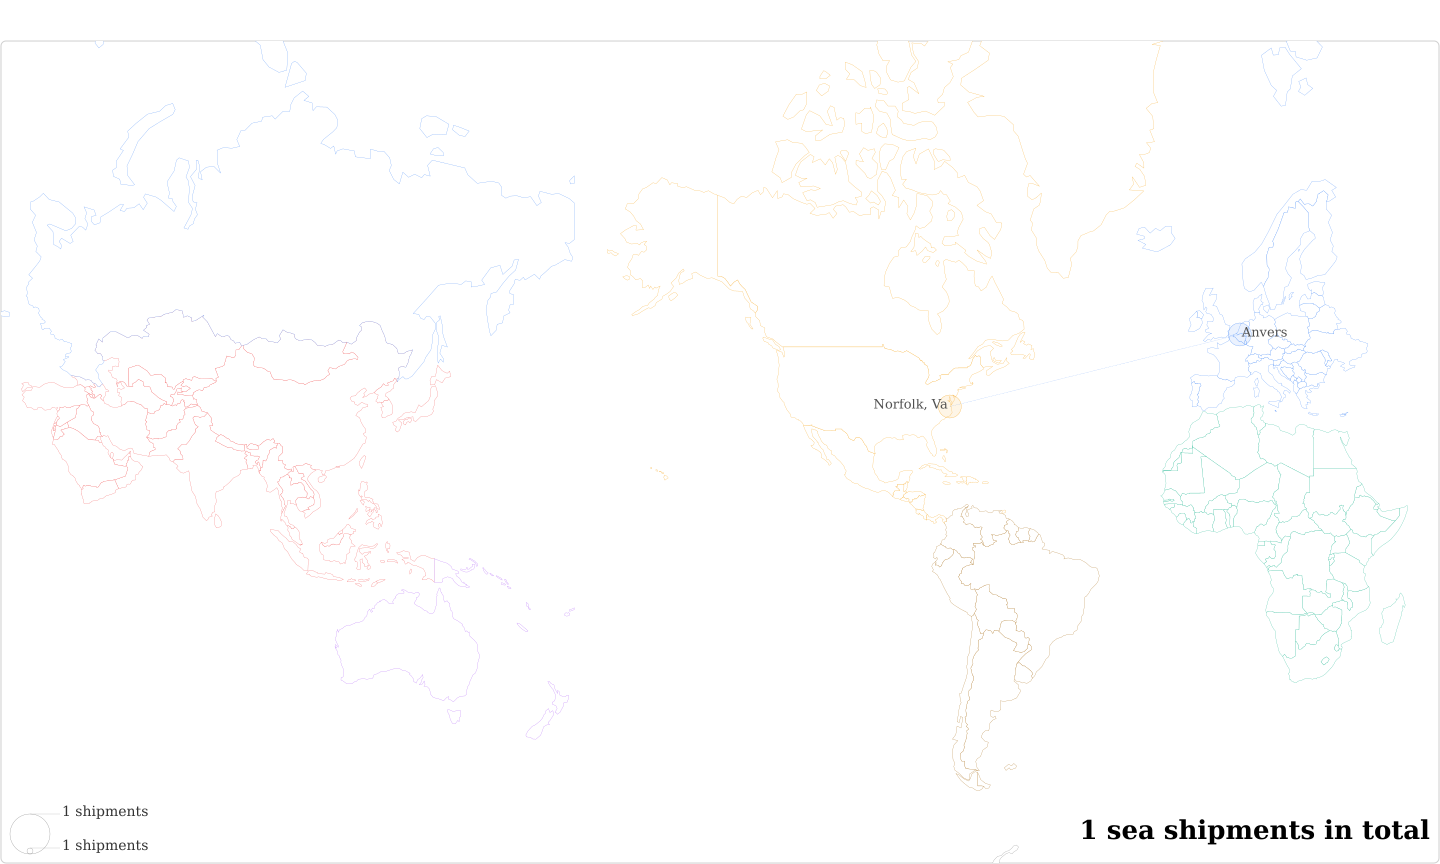 Empresa De Servicios Azucareros S A's Imports Per Country Map